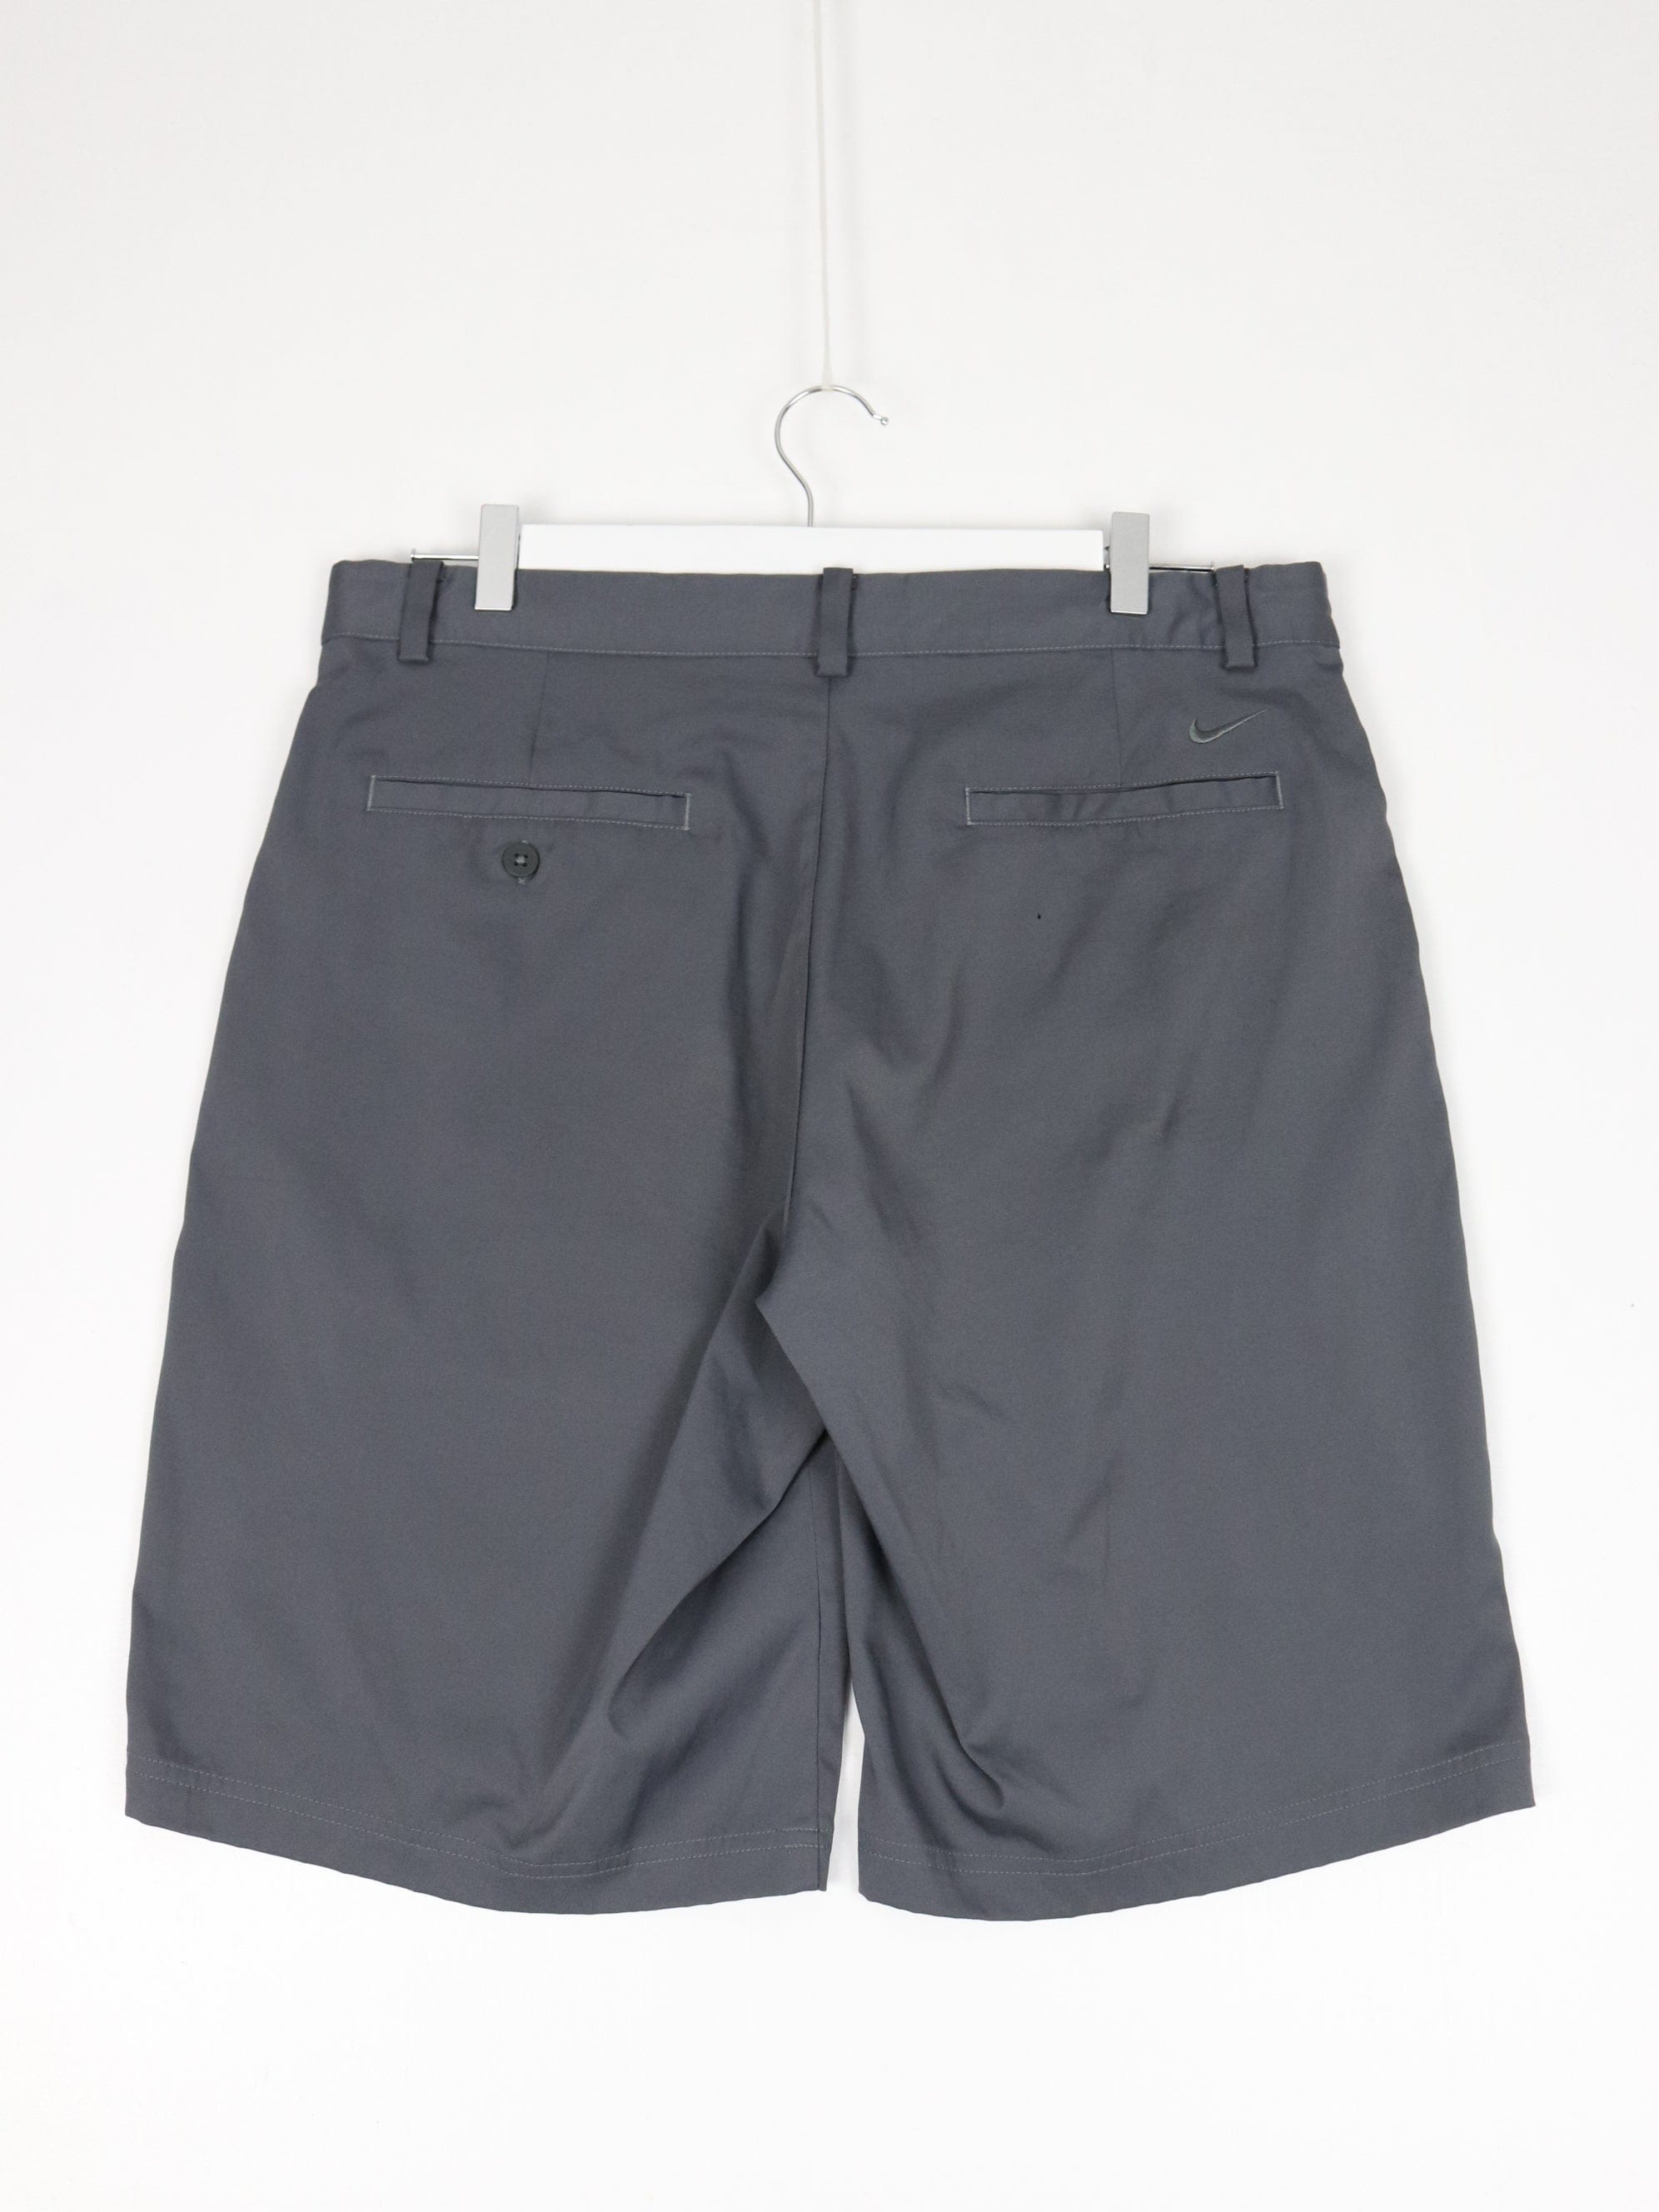 Nike Shorts Mens XL Grey Mesh Athletic Dri-Fit – Proper Vintage